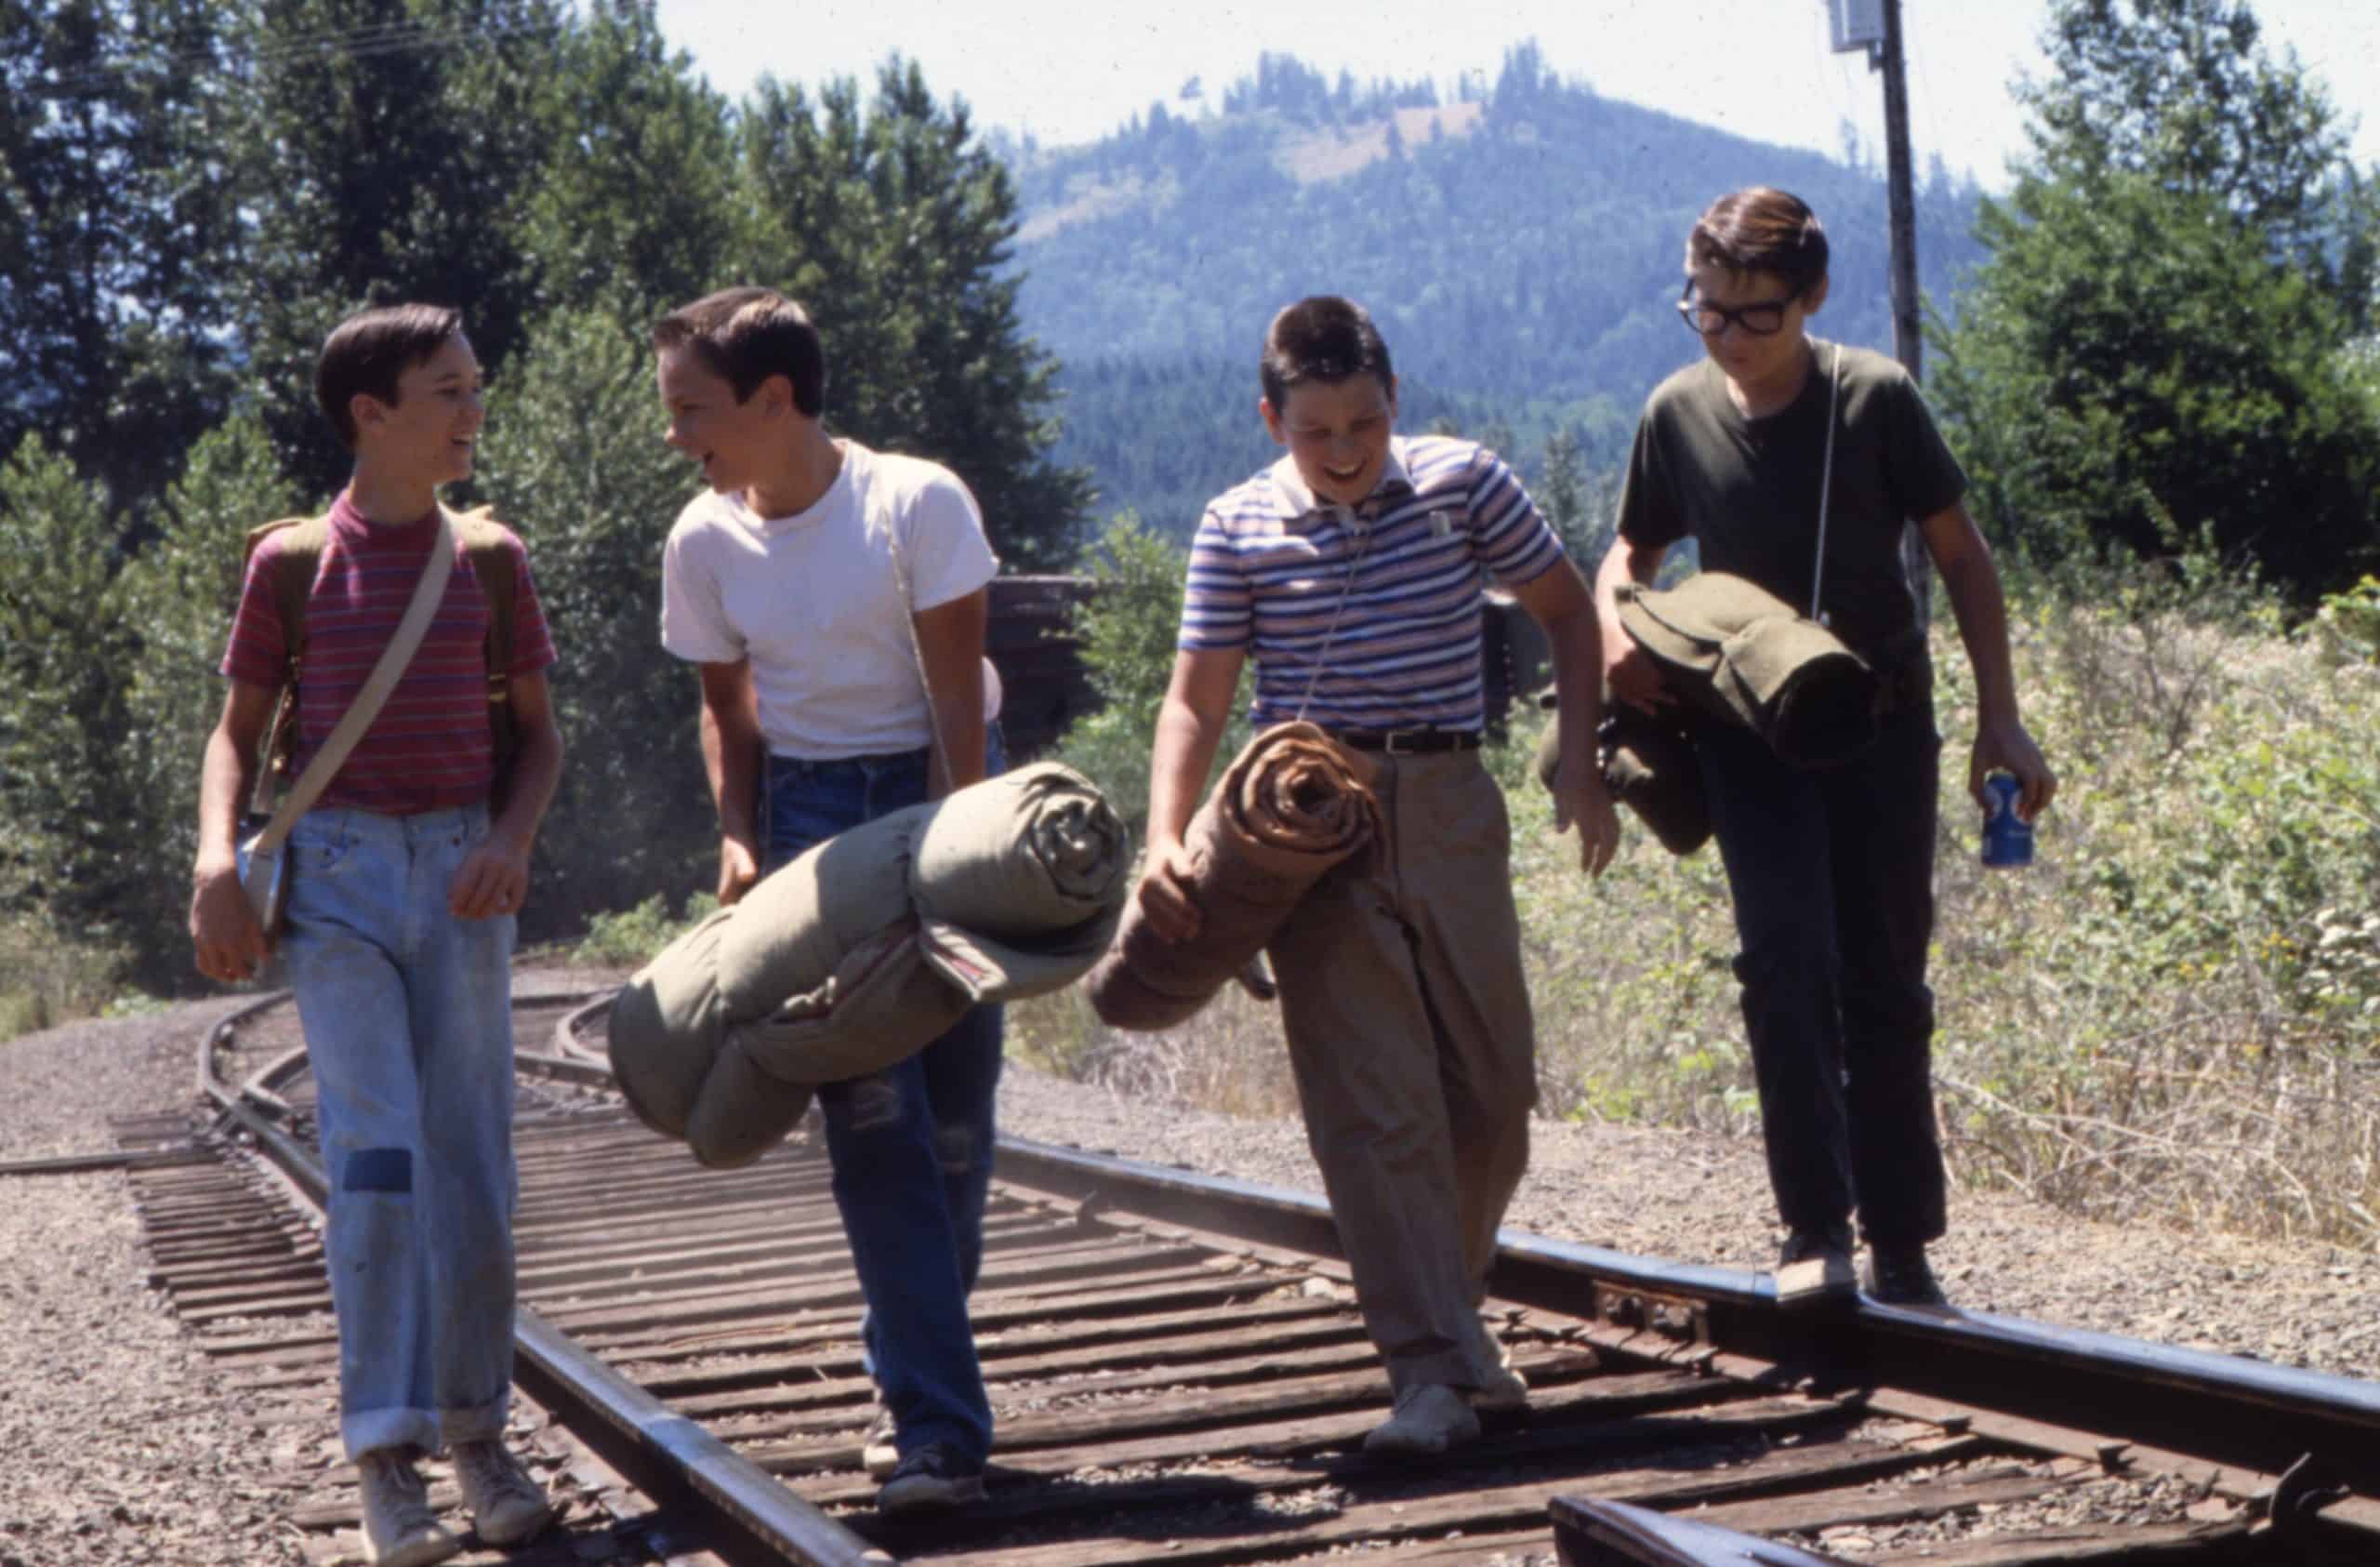 Four friends walking on a railroad track carrying bedrolls